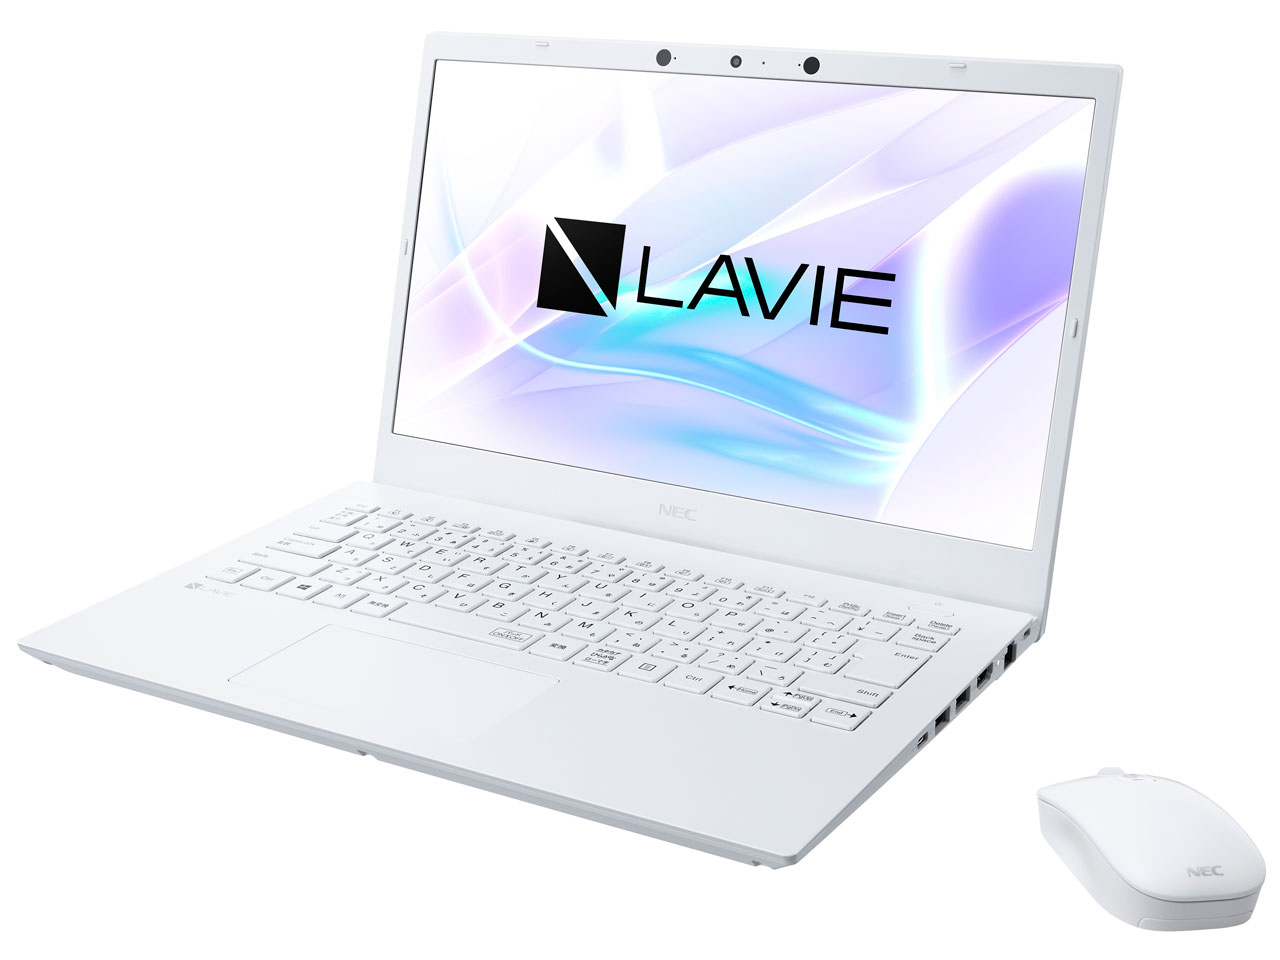 LAVIE N14 N1475/CAW PC-N1475CAW [パールホワイト]